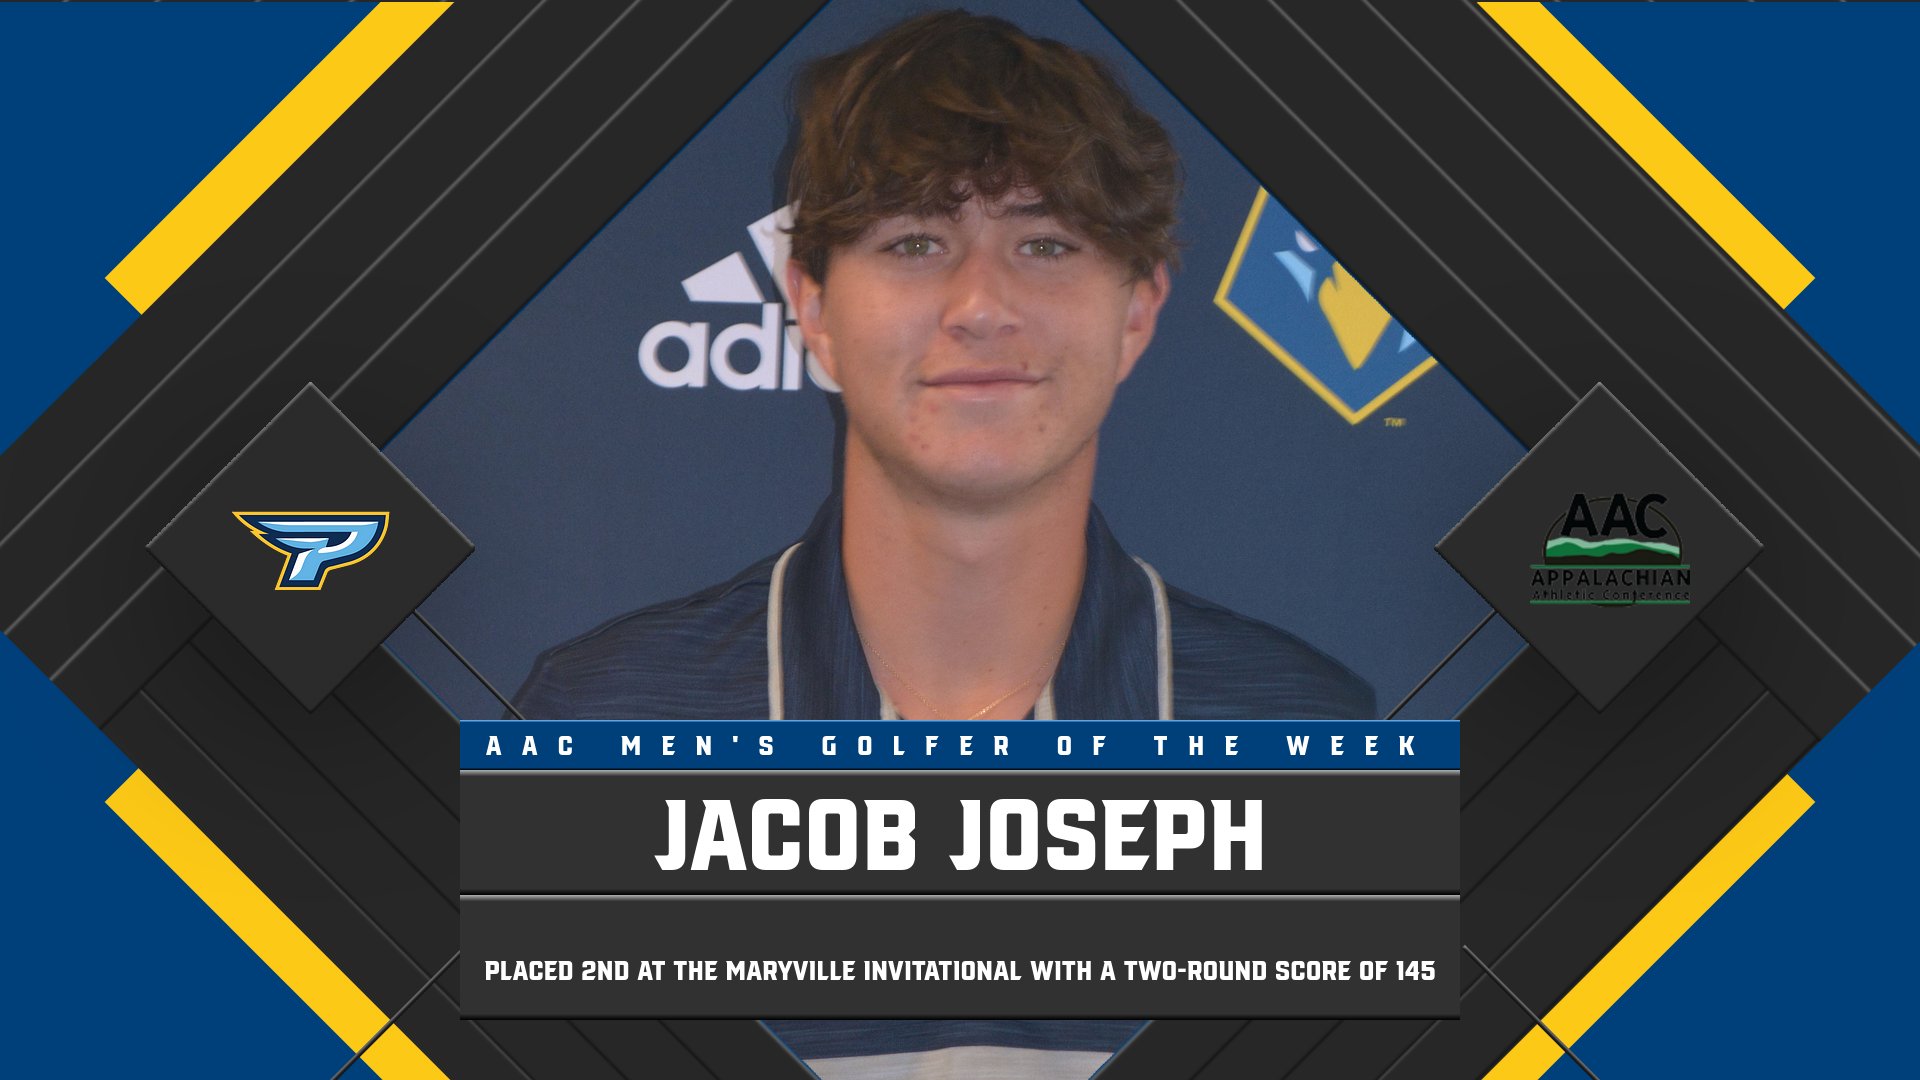 Jacob Joseph earns AAC Men's Golfer of the Week honors